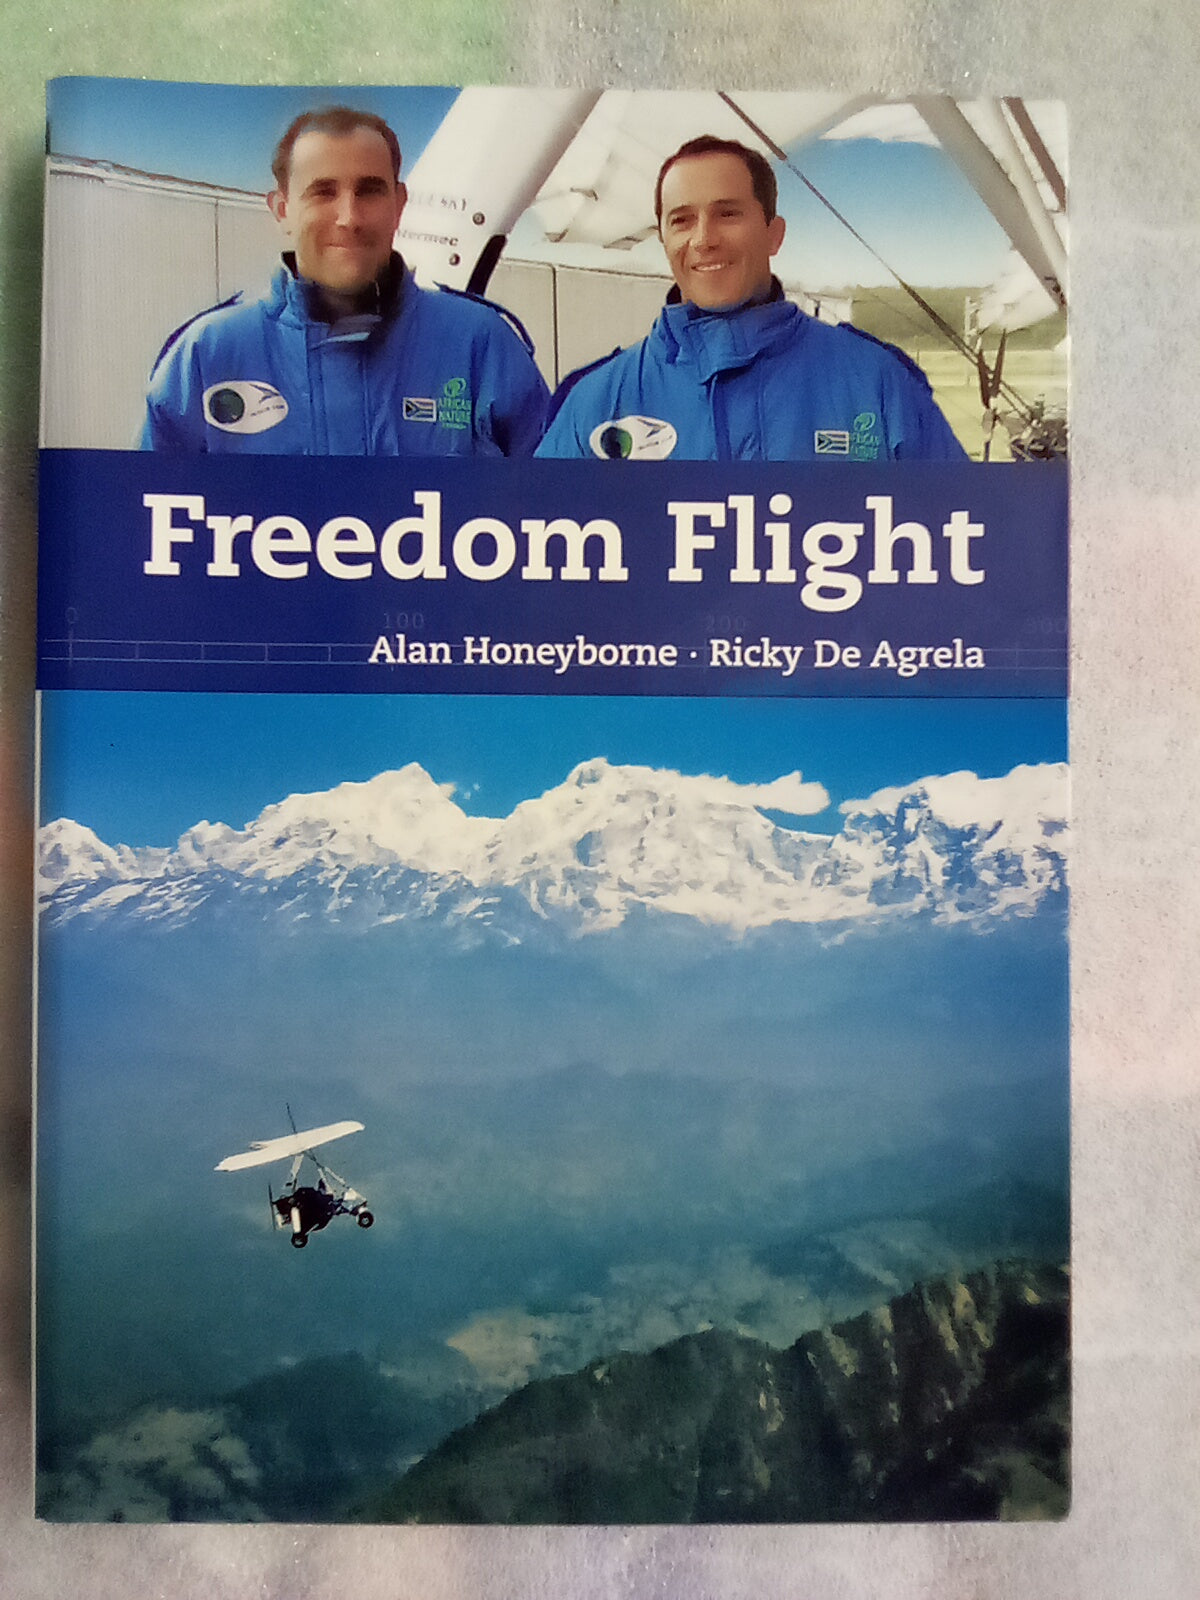 Freedom Flight - Around the World by Microlight